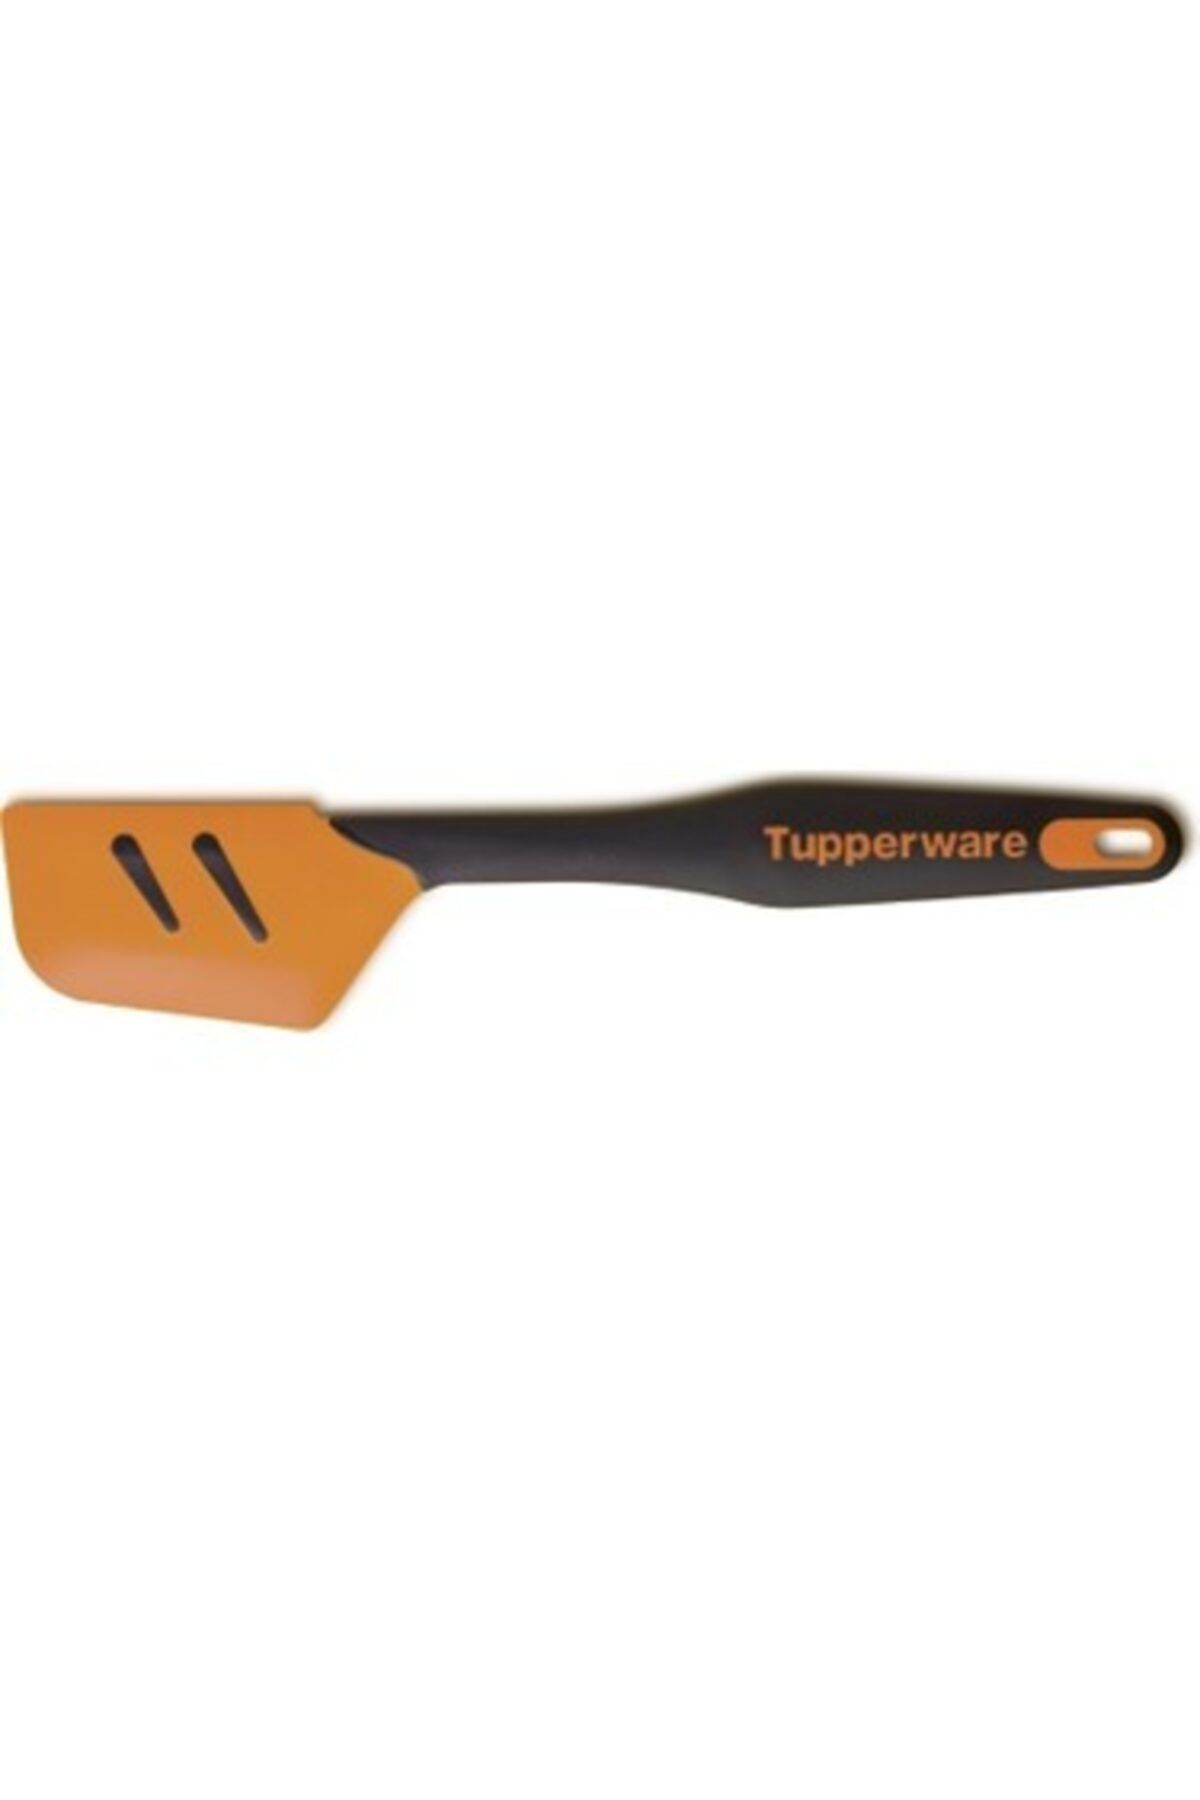 Tupperware Silikon Spatula